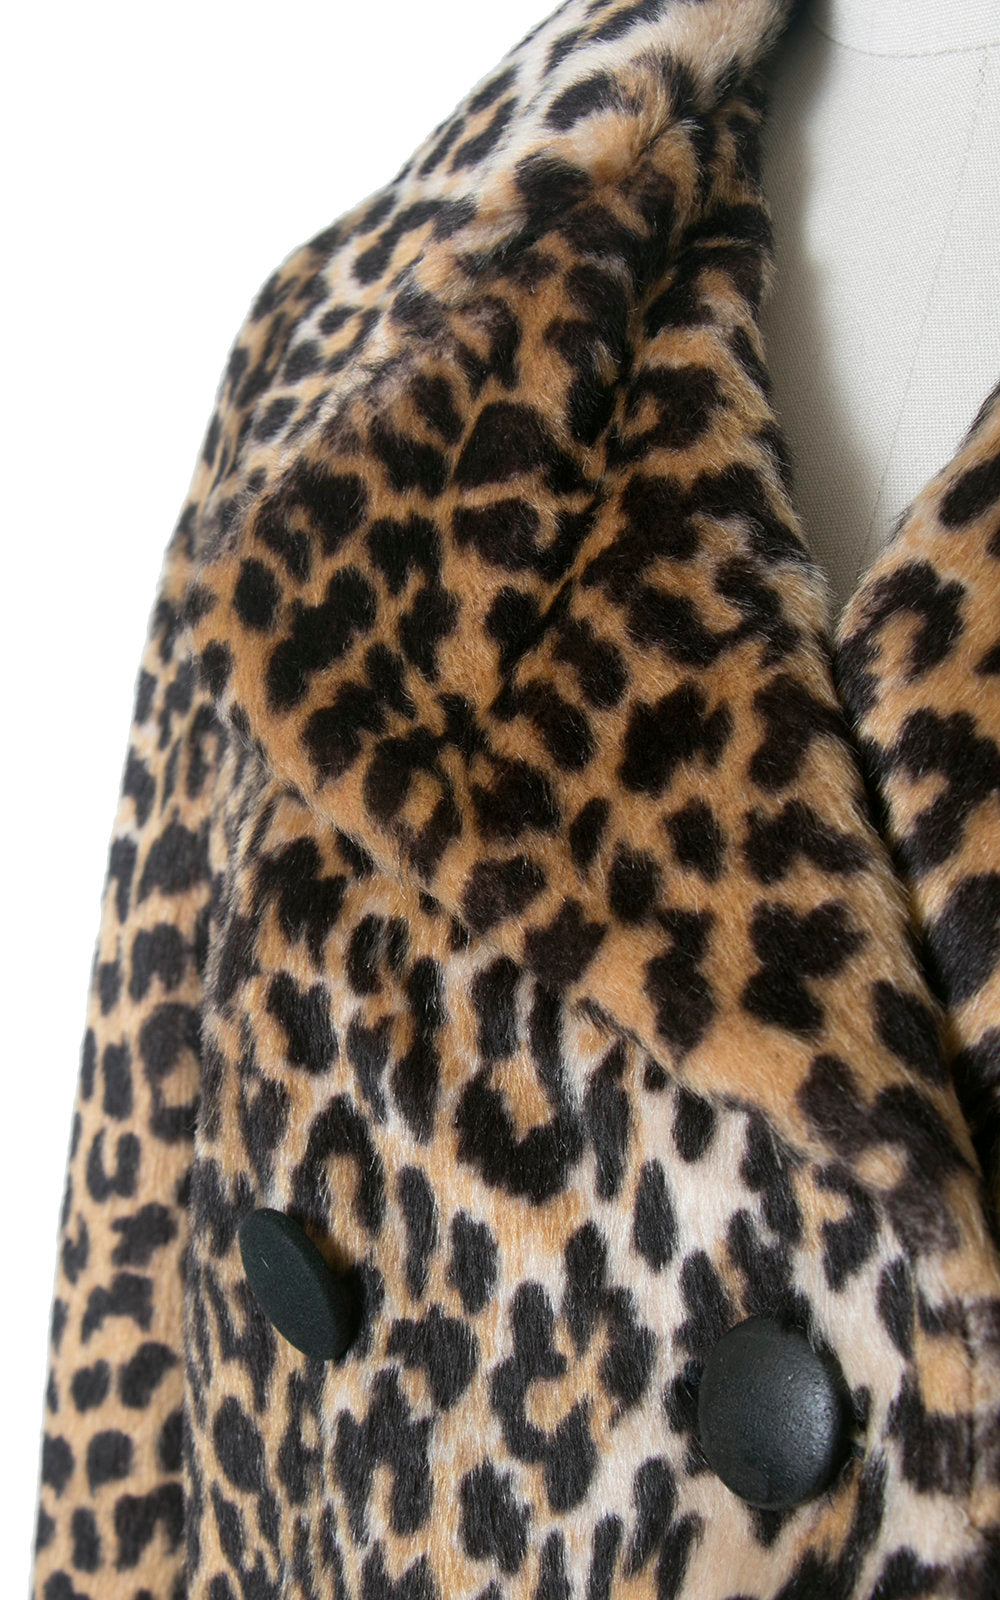 Vintage 1960s Coat | 60s Leopard Print Faux Fur Double Breasted Jacket Animal Print Long Winter Peacoat (medium/large)